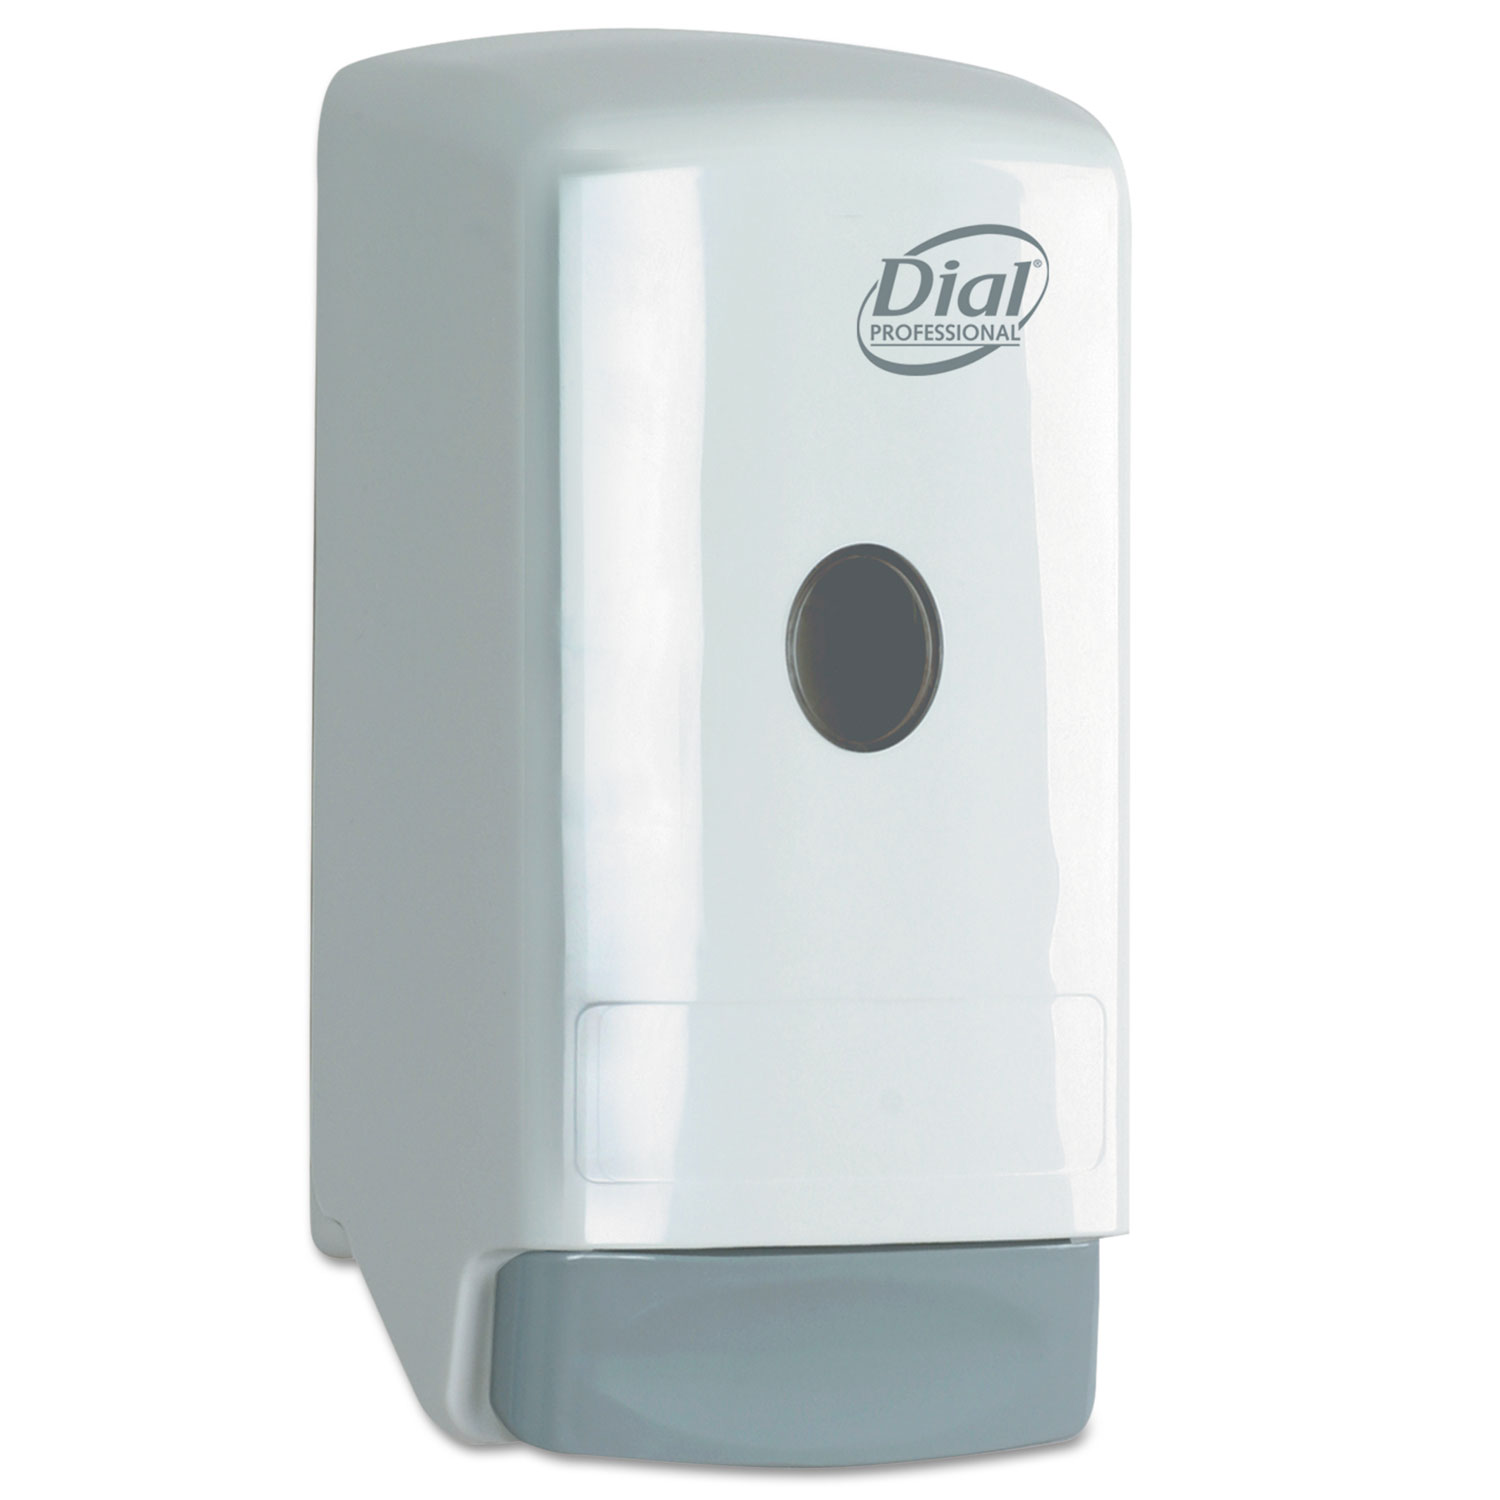  Dial Professional DIA 03226 Liquid Soap Dispenser, Model 22, 800 mL, 5.25 x 4.25 x 10.25, White (DIA03226) 